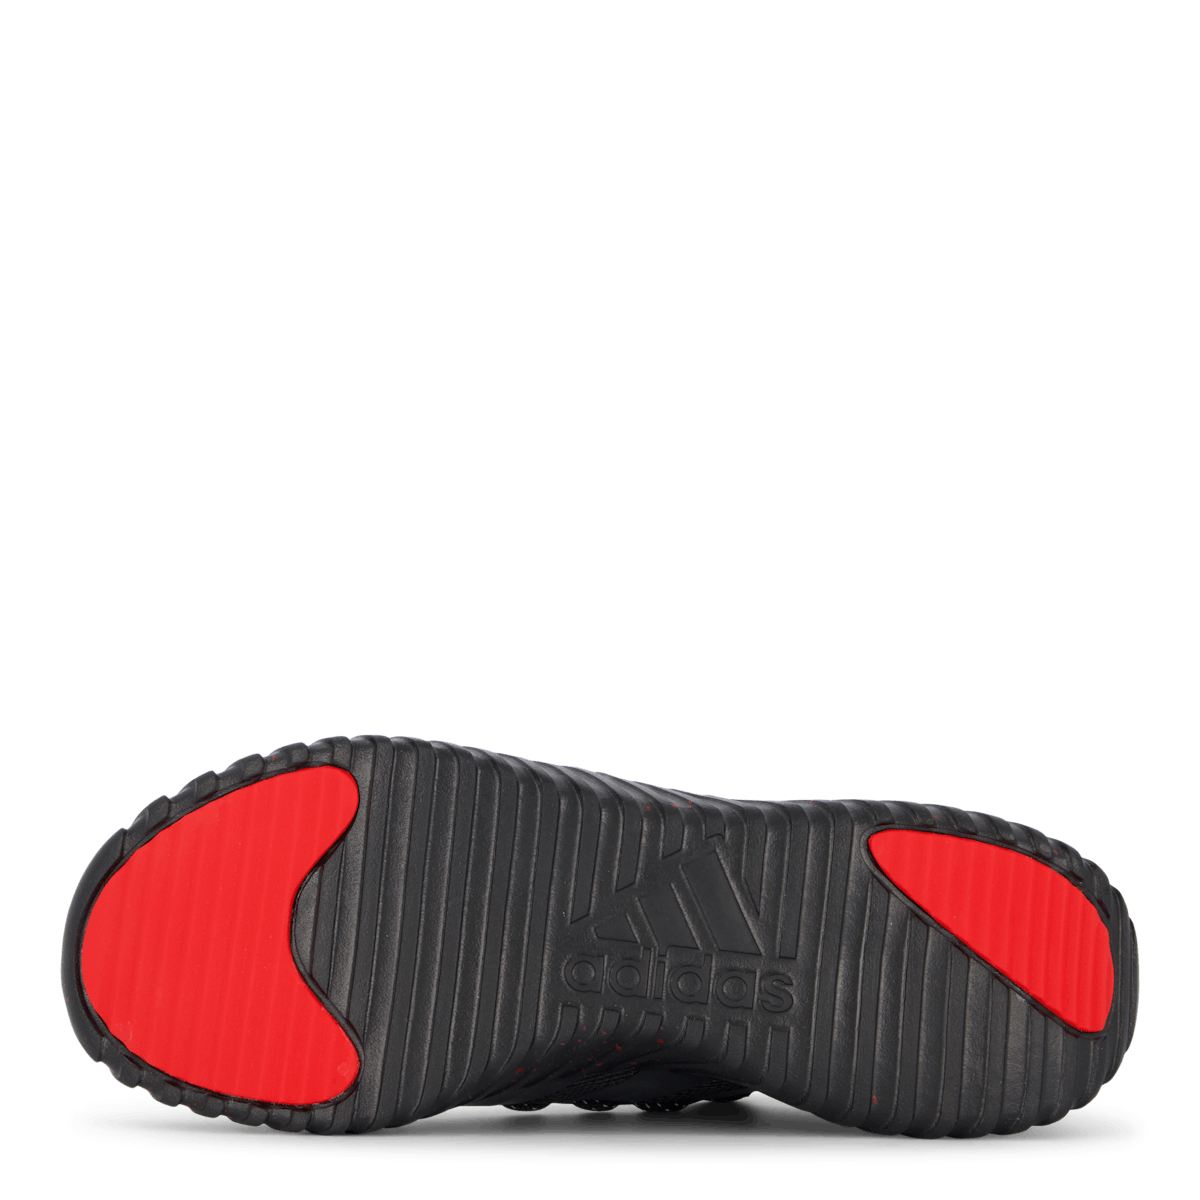 Kaptir 3.0 Shoes Black